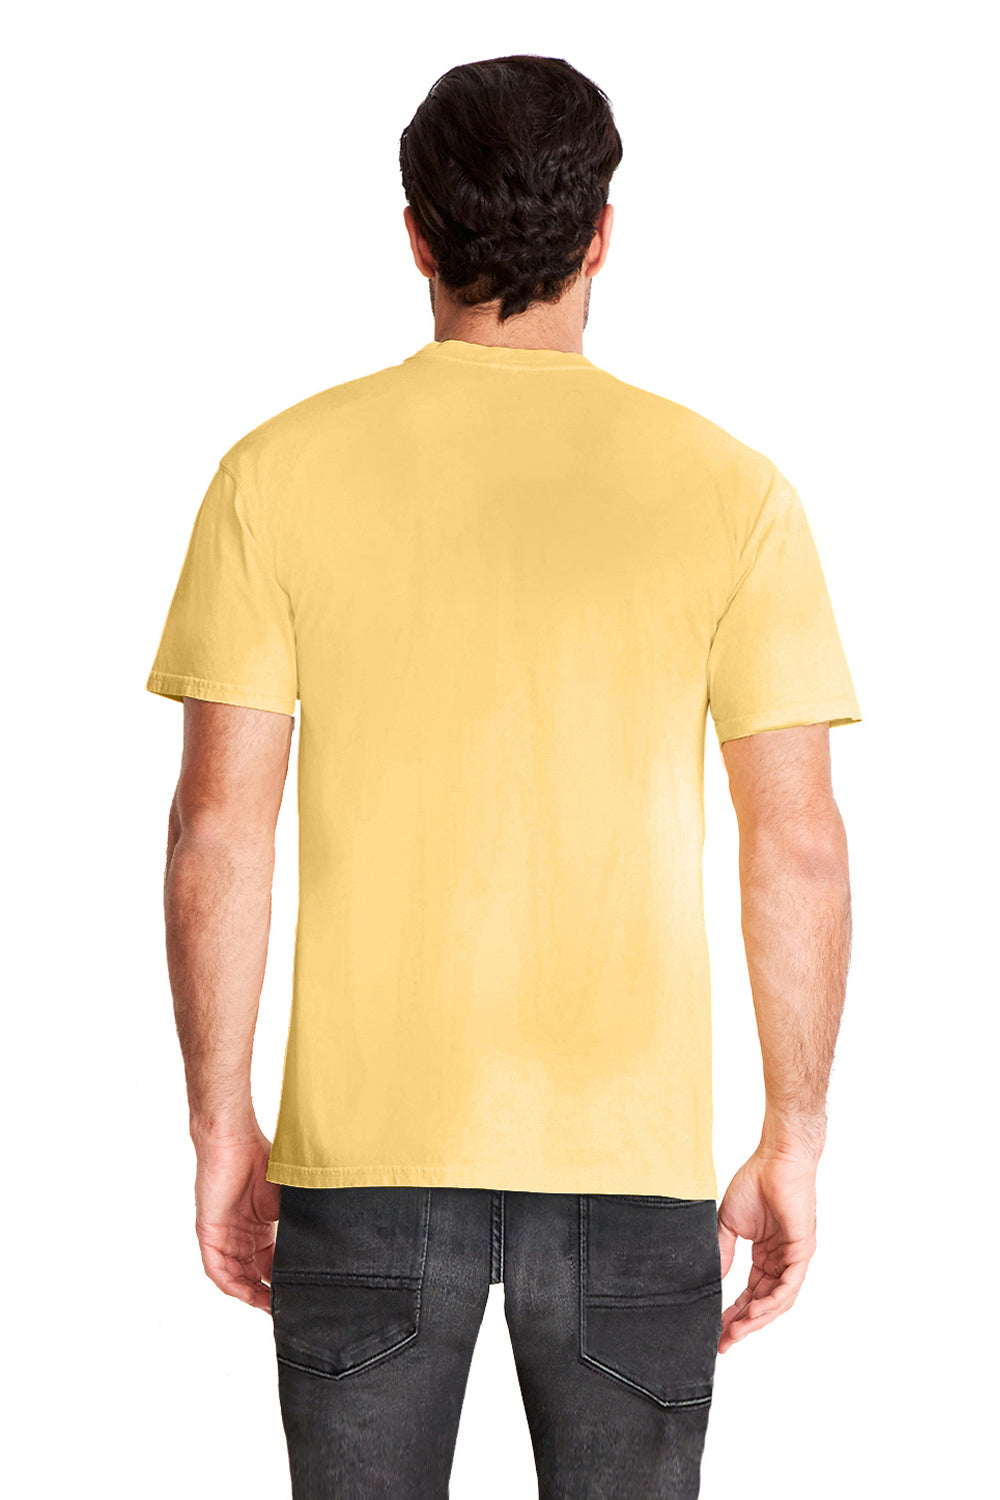 Next Level 7410 Mens Inspired Dye Jersey Short Sleeve Crewneck T-Shirt Blonde Yellow Back